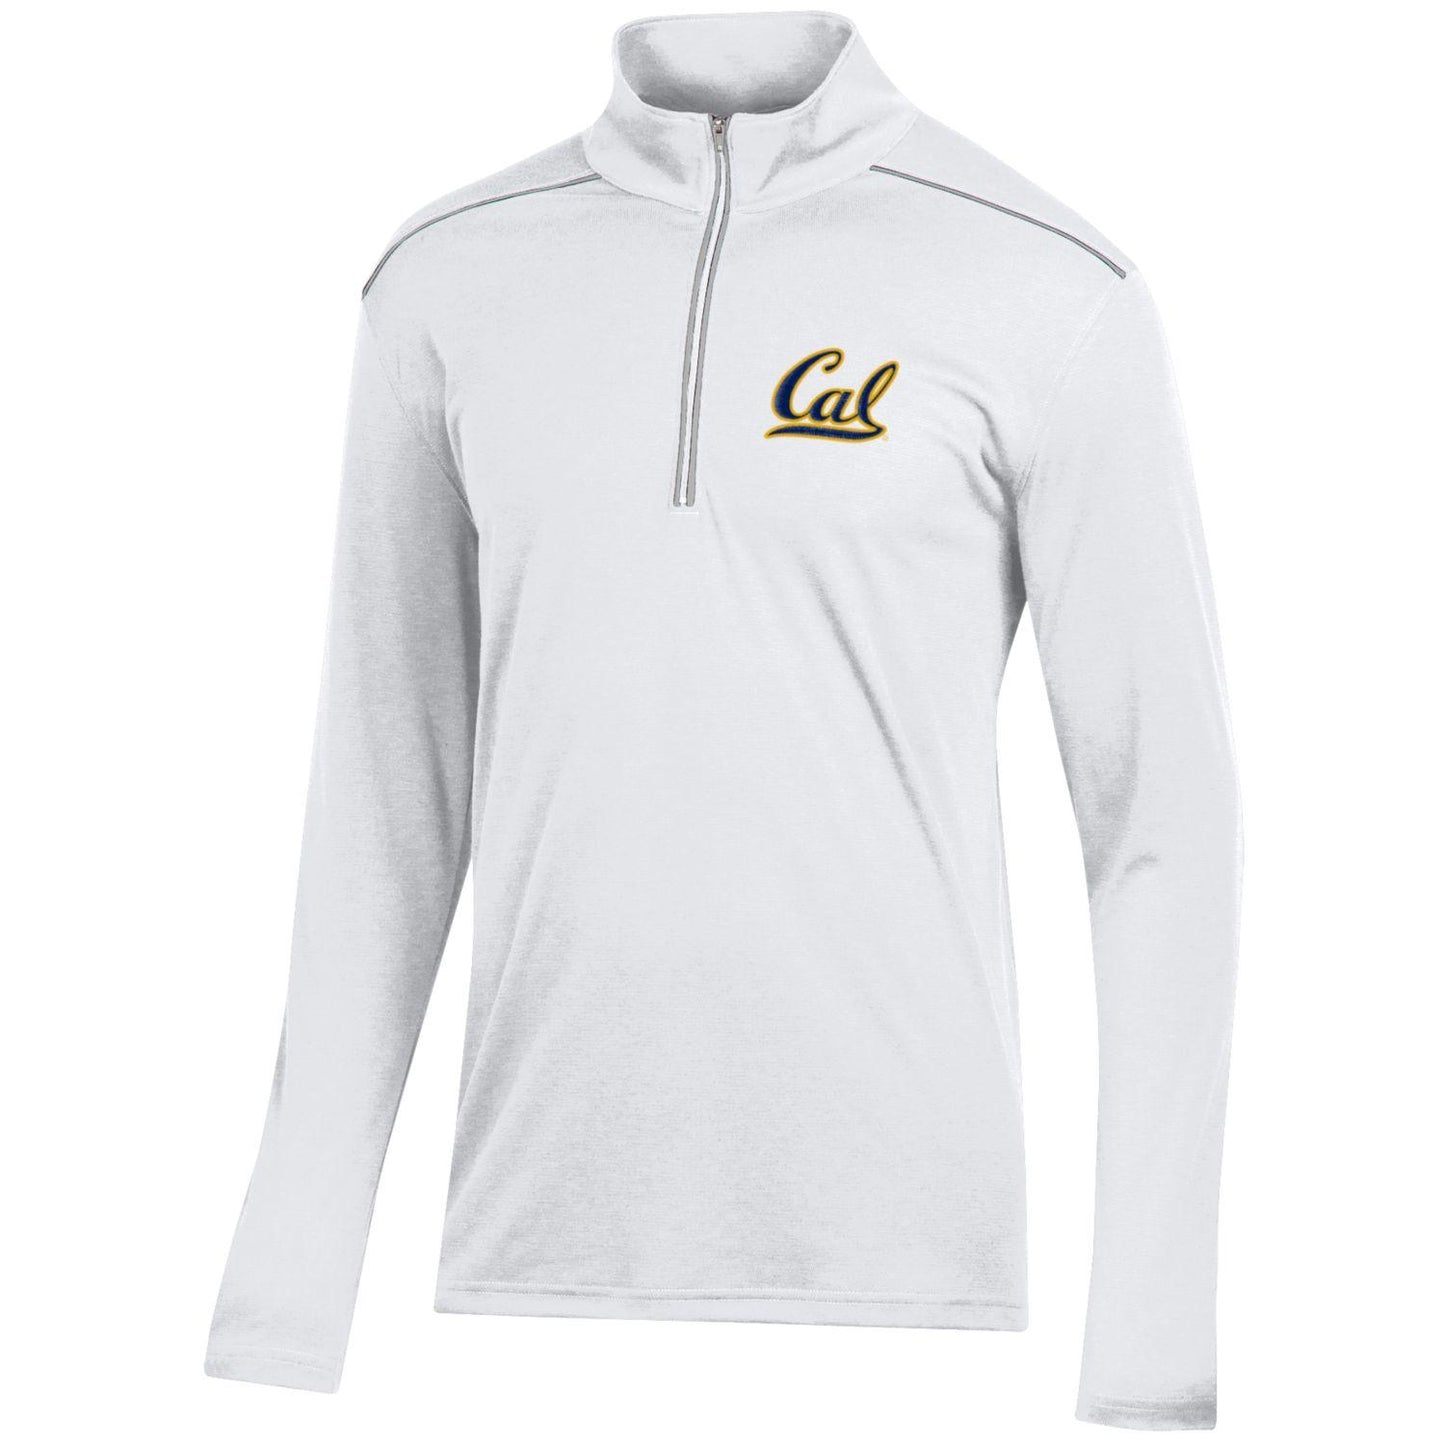 U.C. Berkeley Cal embroidered classic Jacquard 1/4 zip shirt-white-Shop College Wear